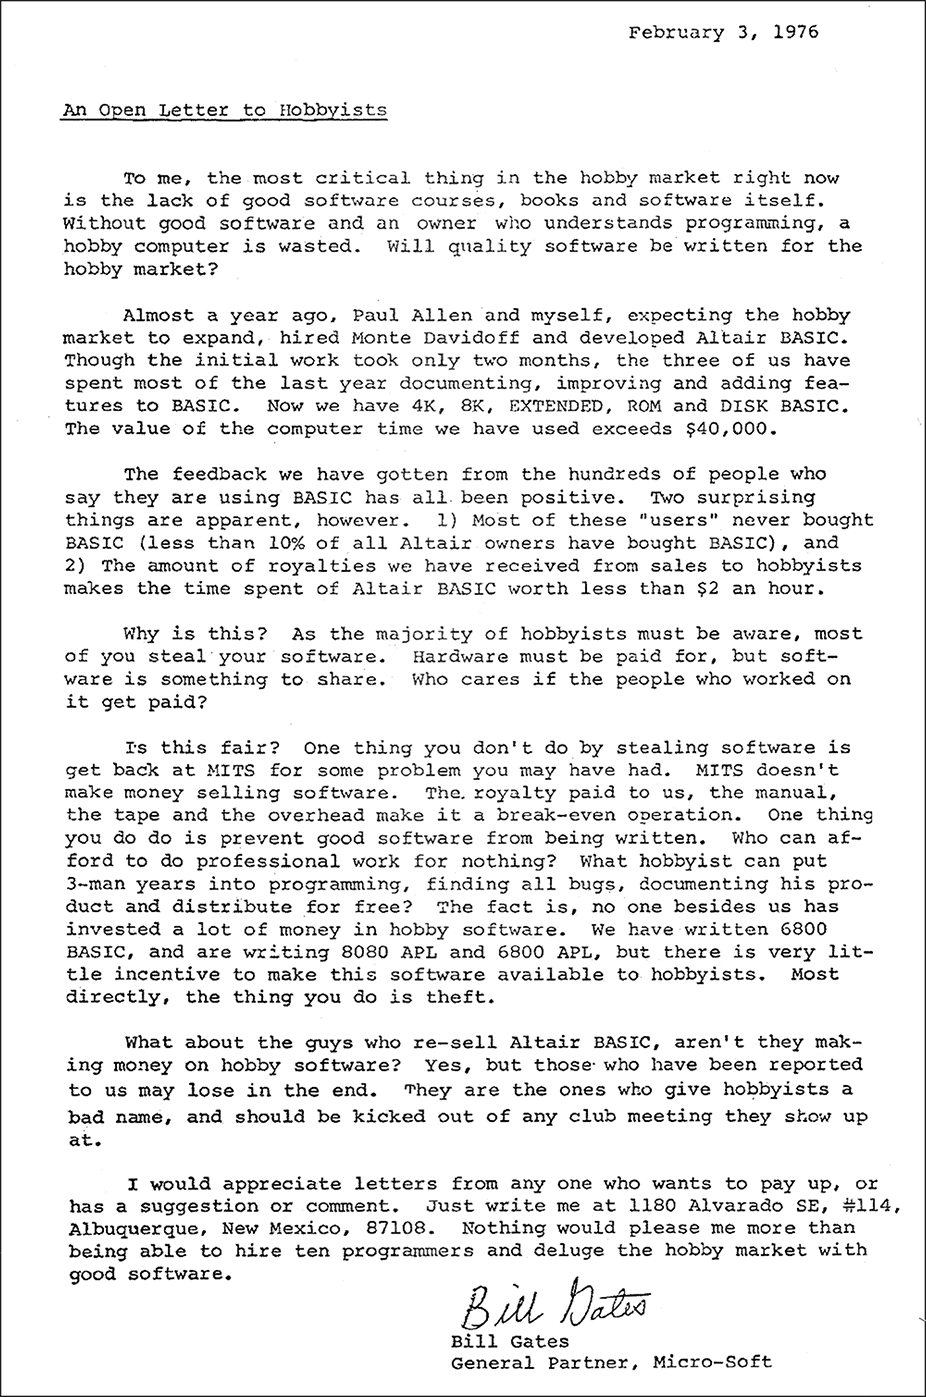 Bill Gates' Open Letter 1976